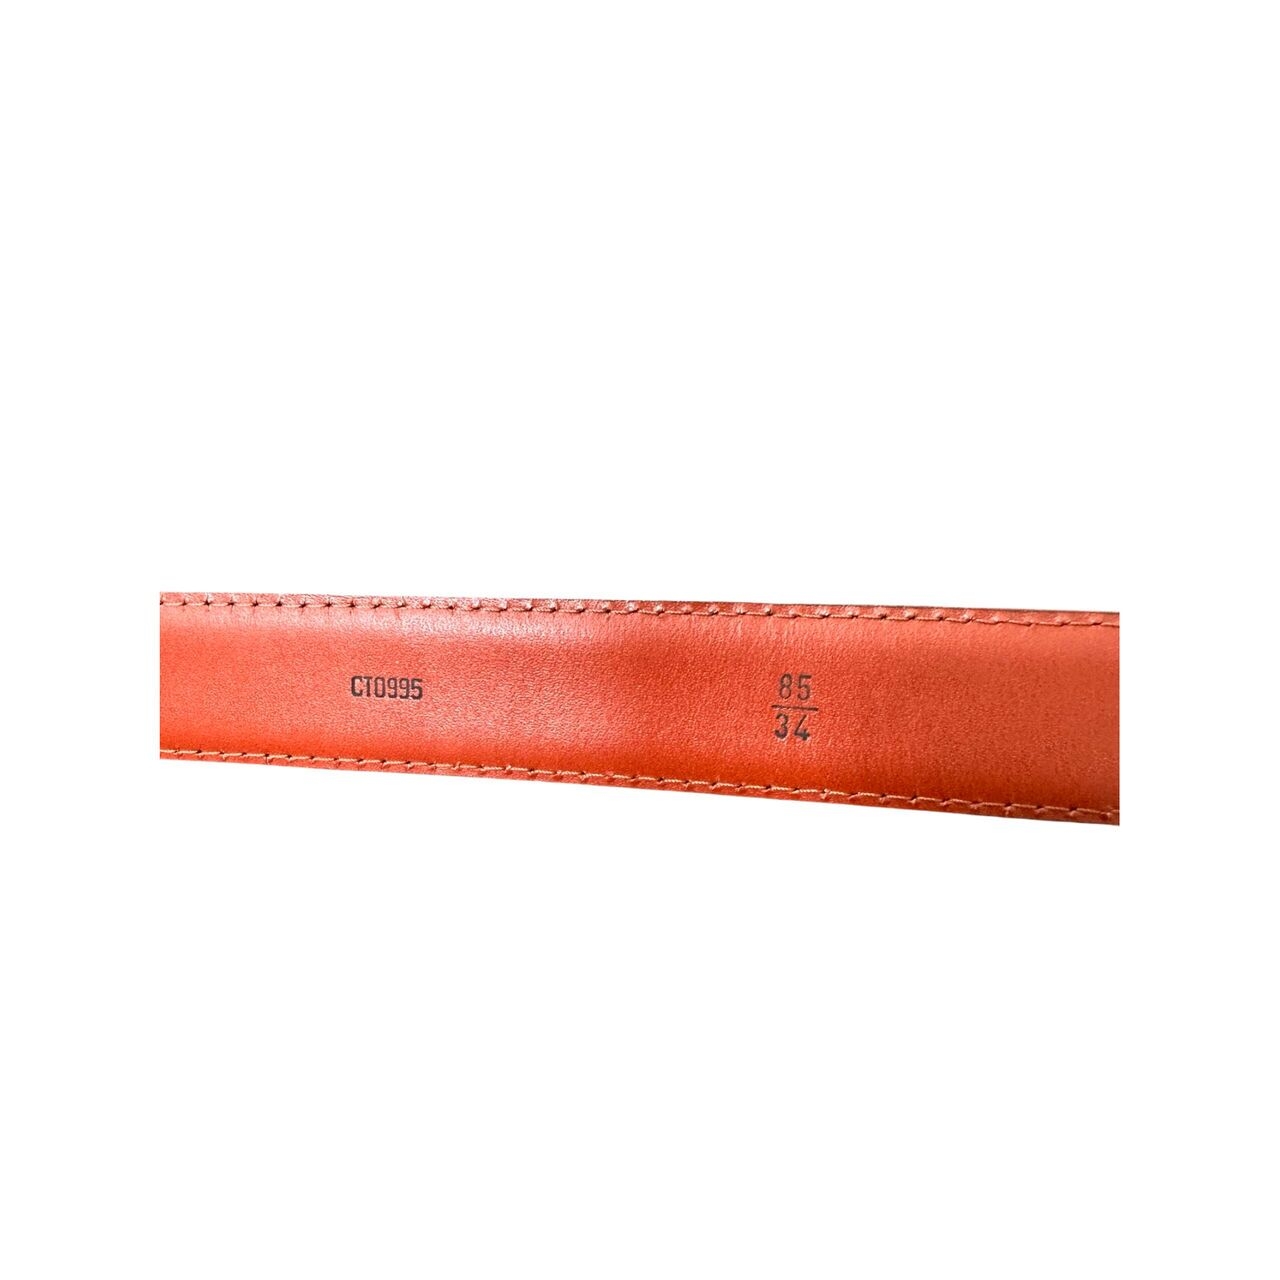 Louis Vuitton Orange Epi Leather Belt